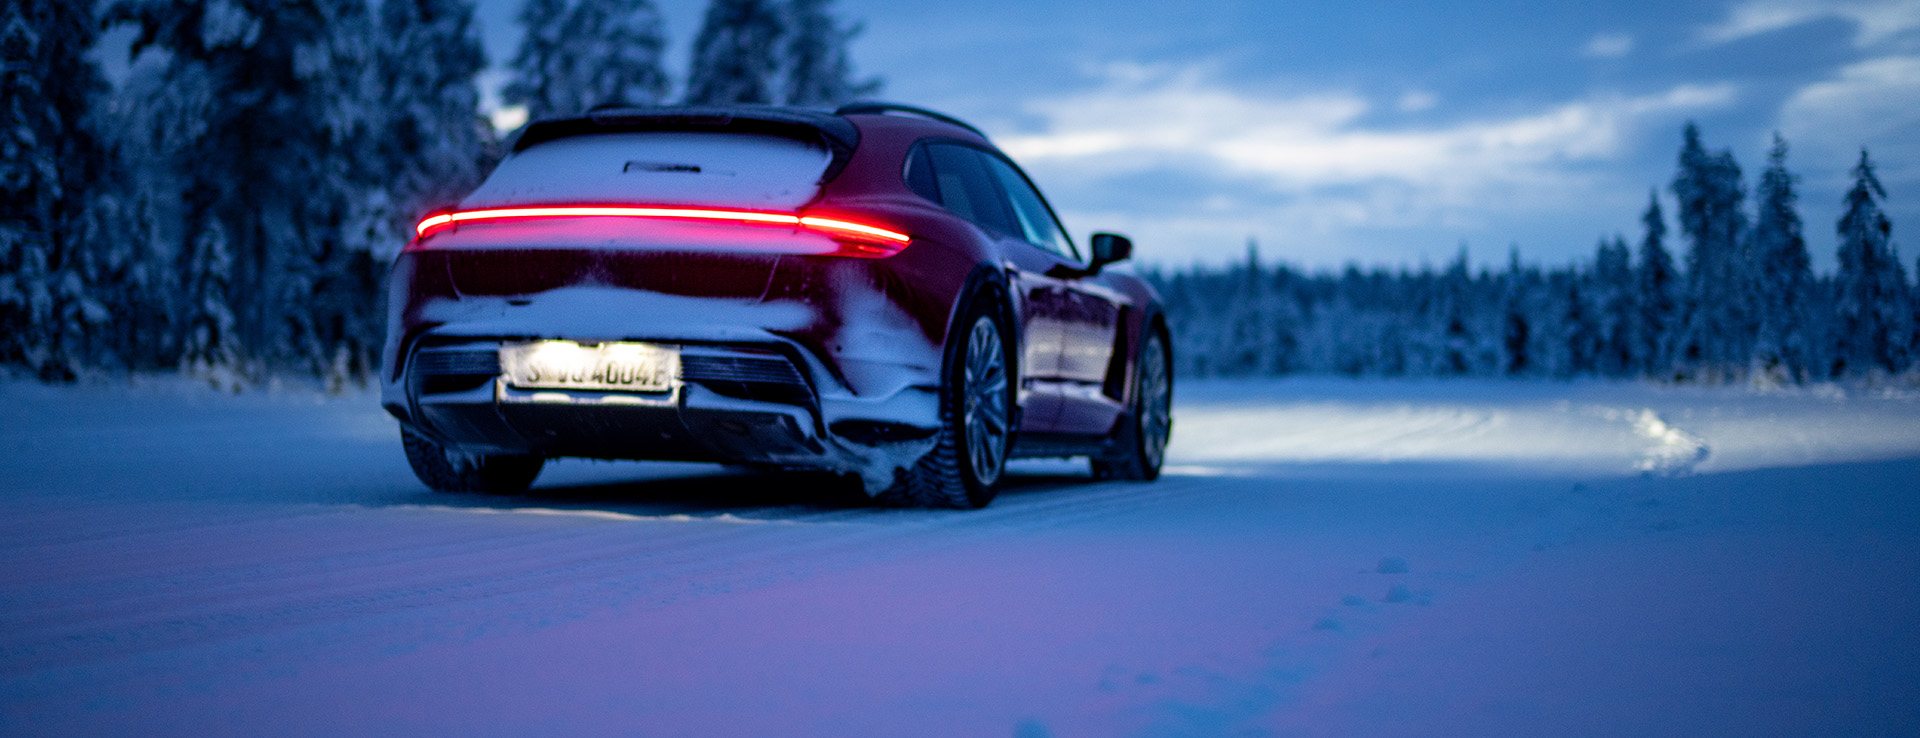 Porsche Taycan Cross Turismo, lights on, at night on snow